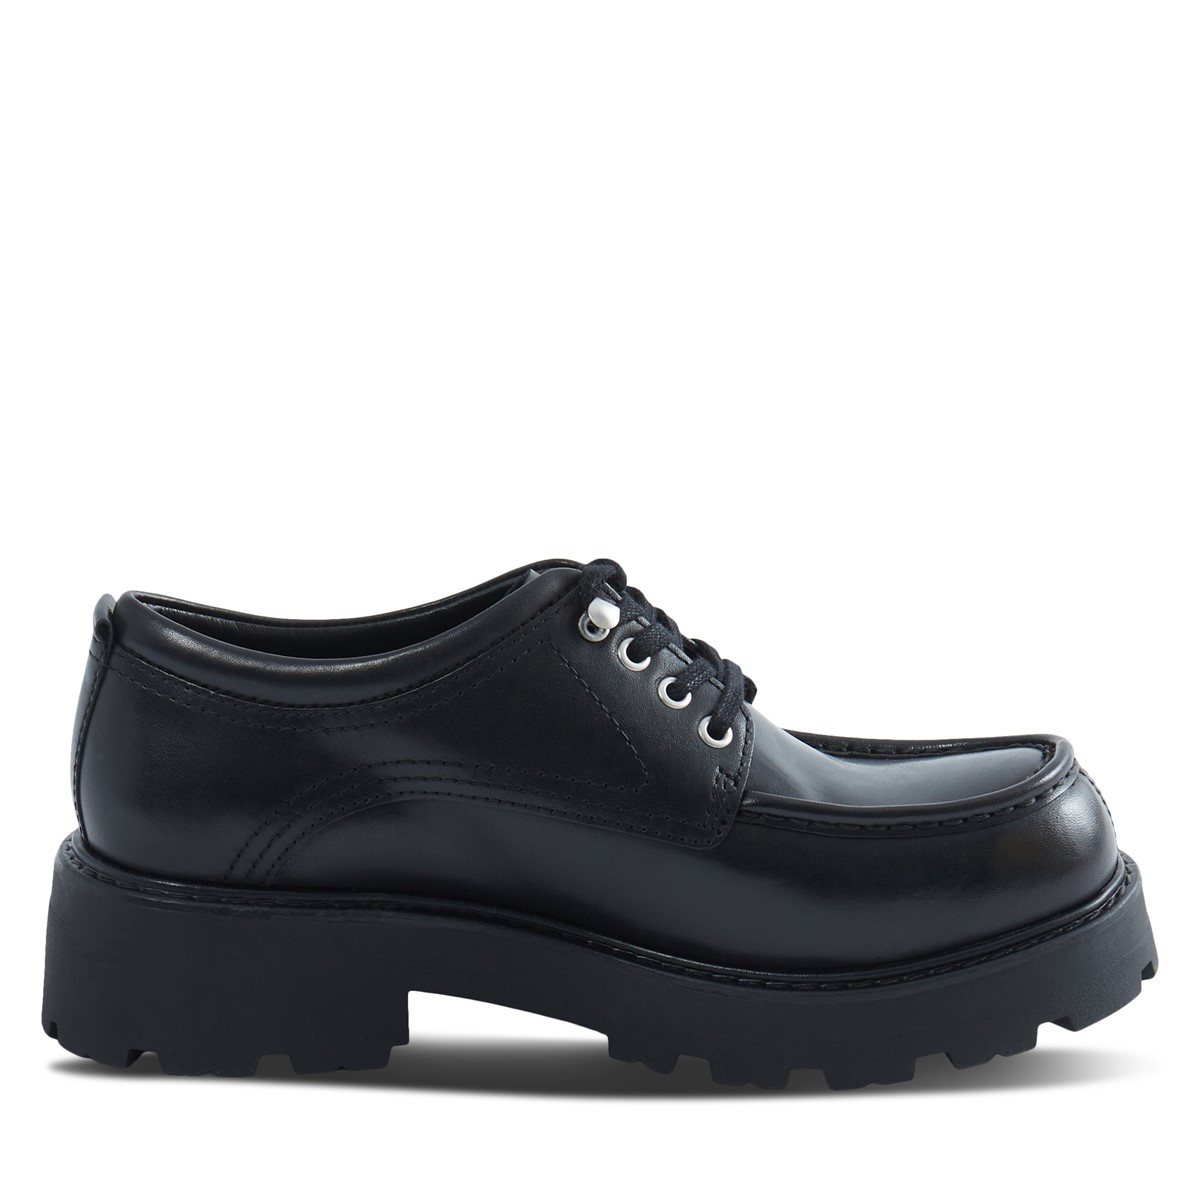 Women's Cosmo 2.0 Platform Shoes in Black